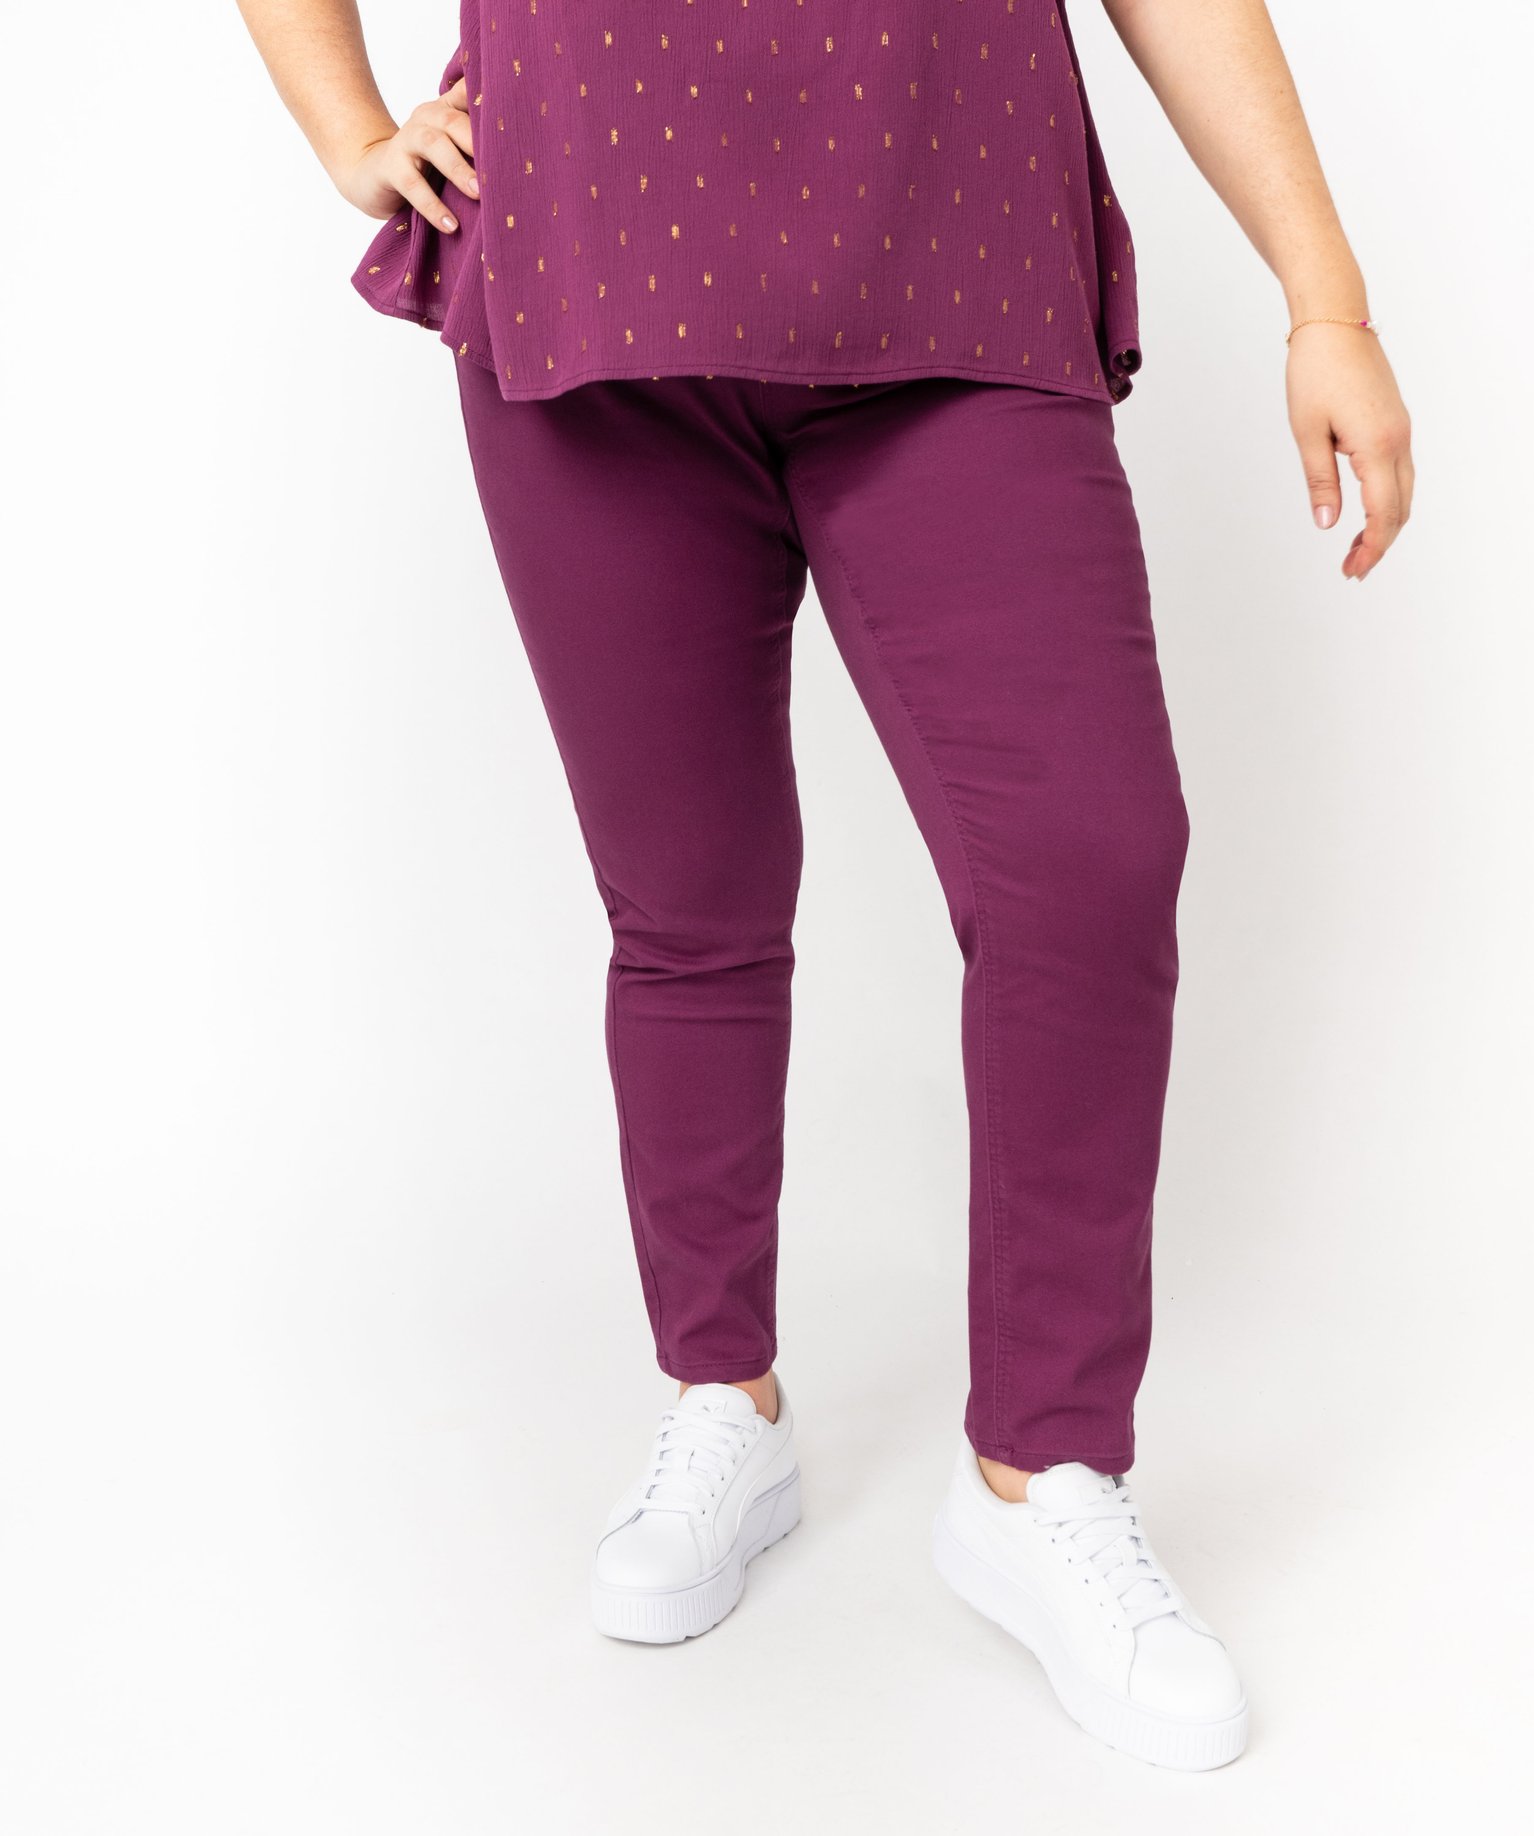 pantalon coupe regular femme grande taille violet pantalons et jeans